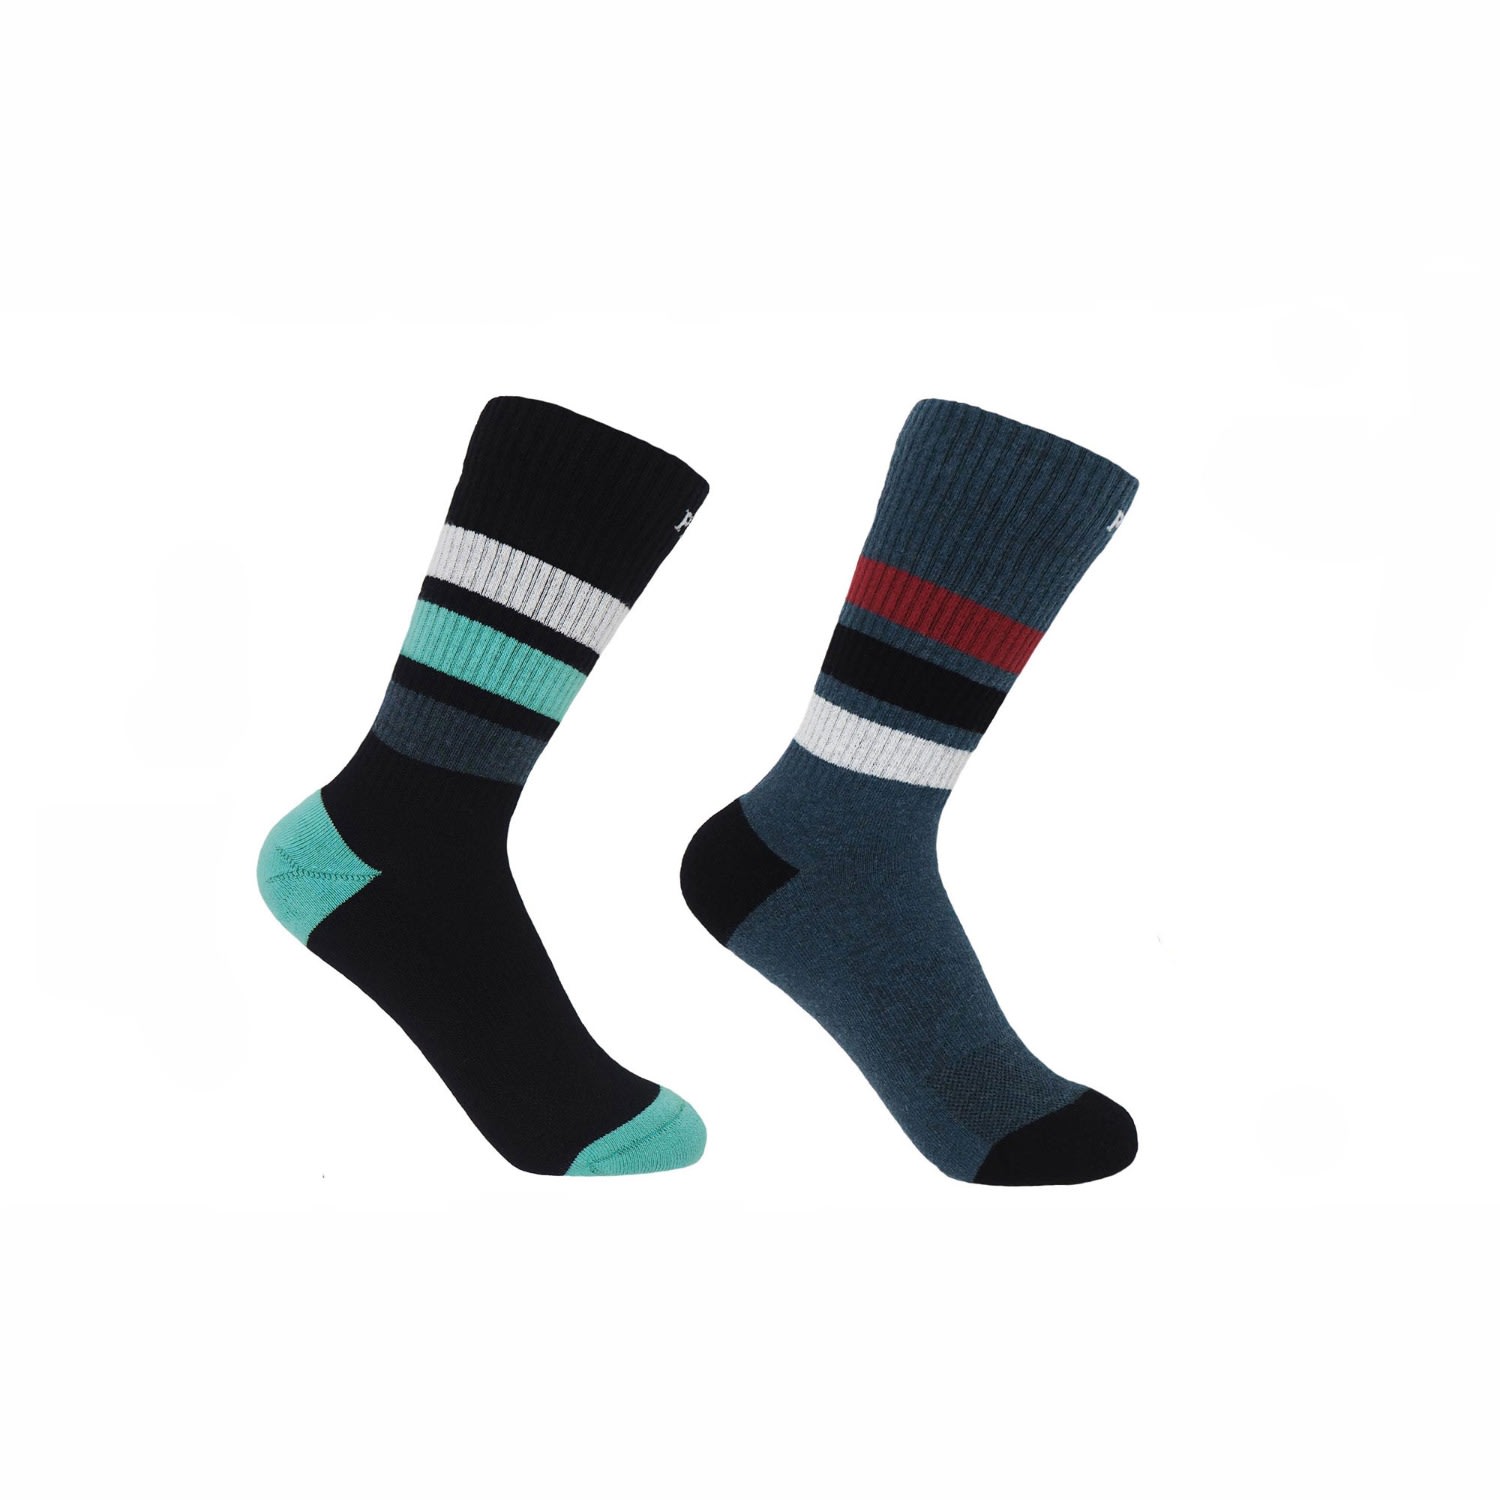 Black & Navy Striped Organic Women’s Sport Socks 2 Pack One Size Peper Harow - Made in England